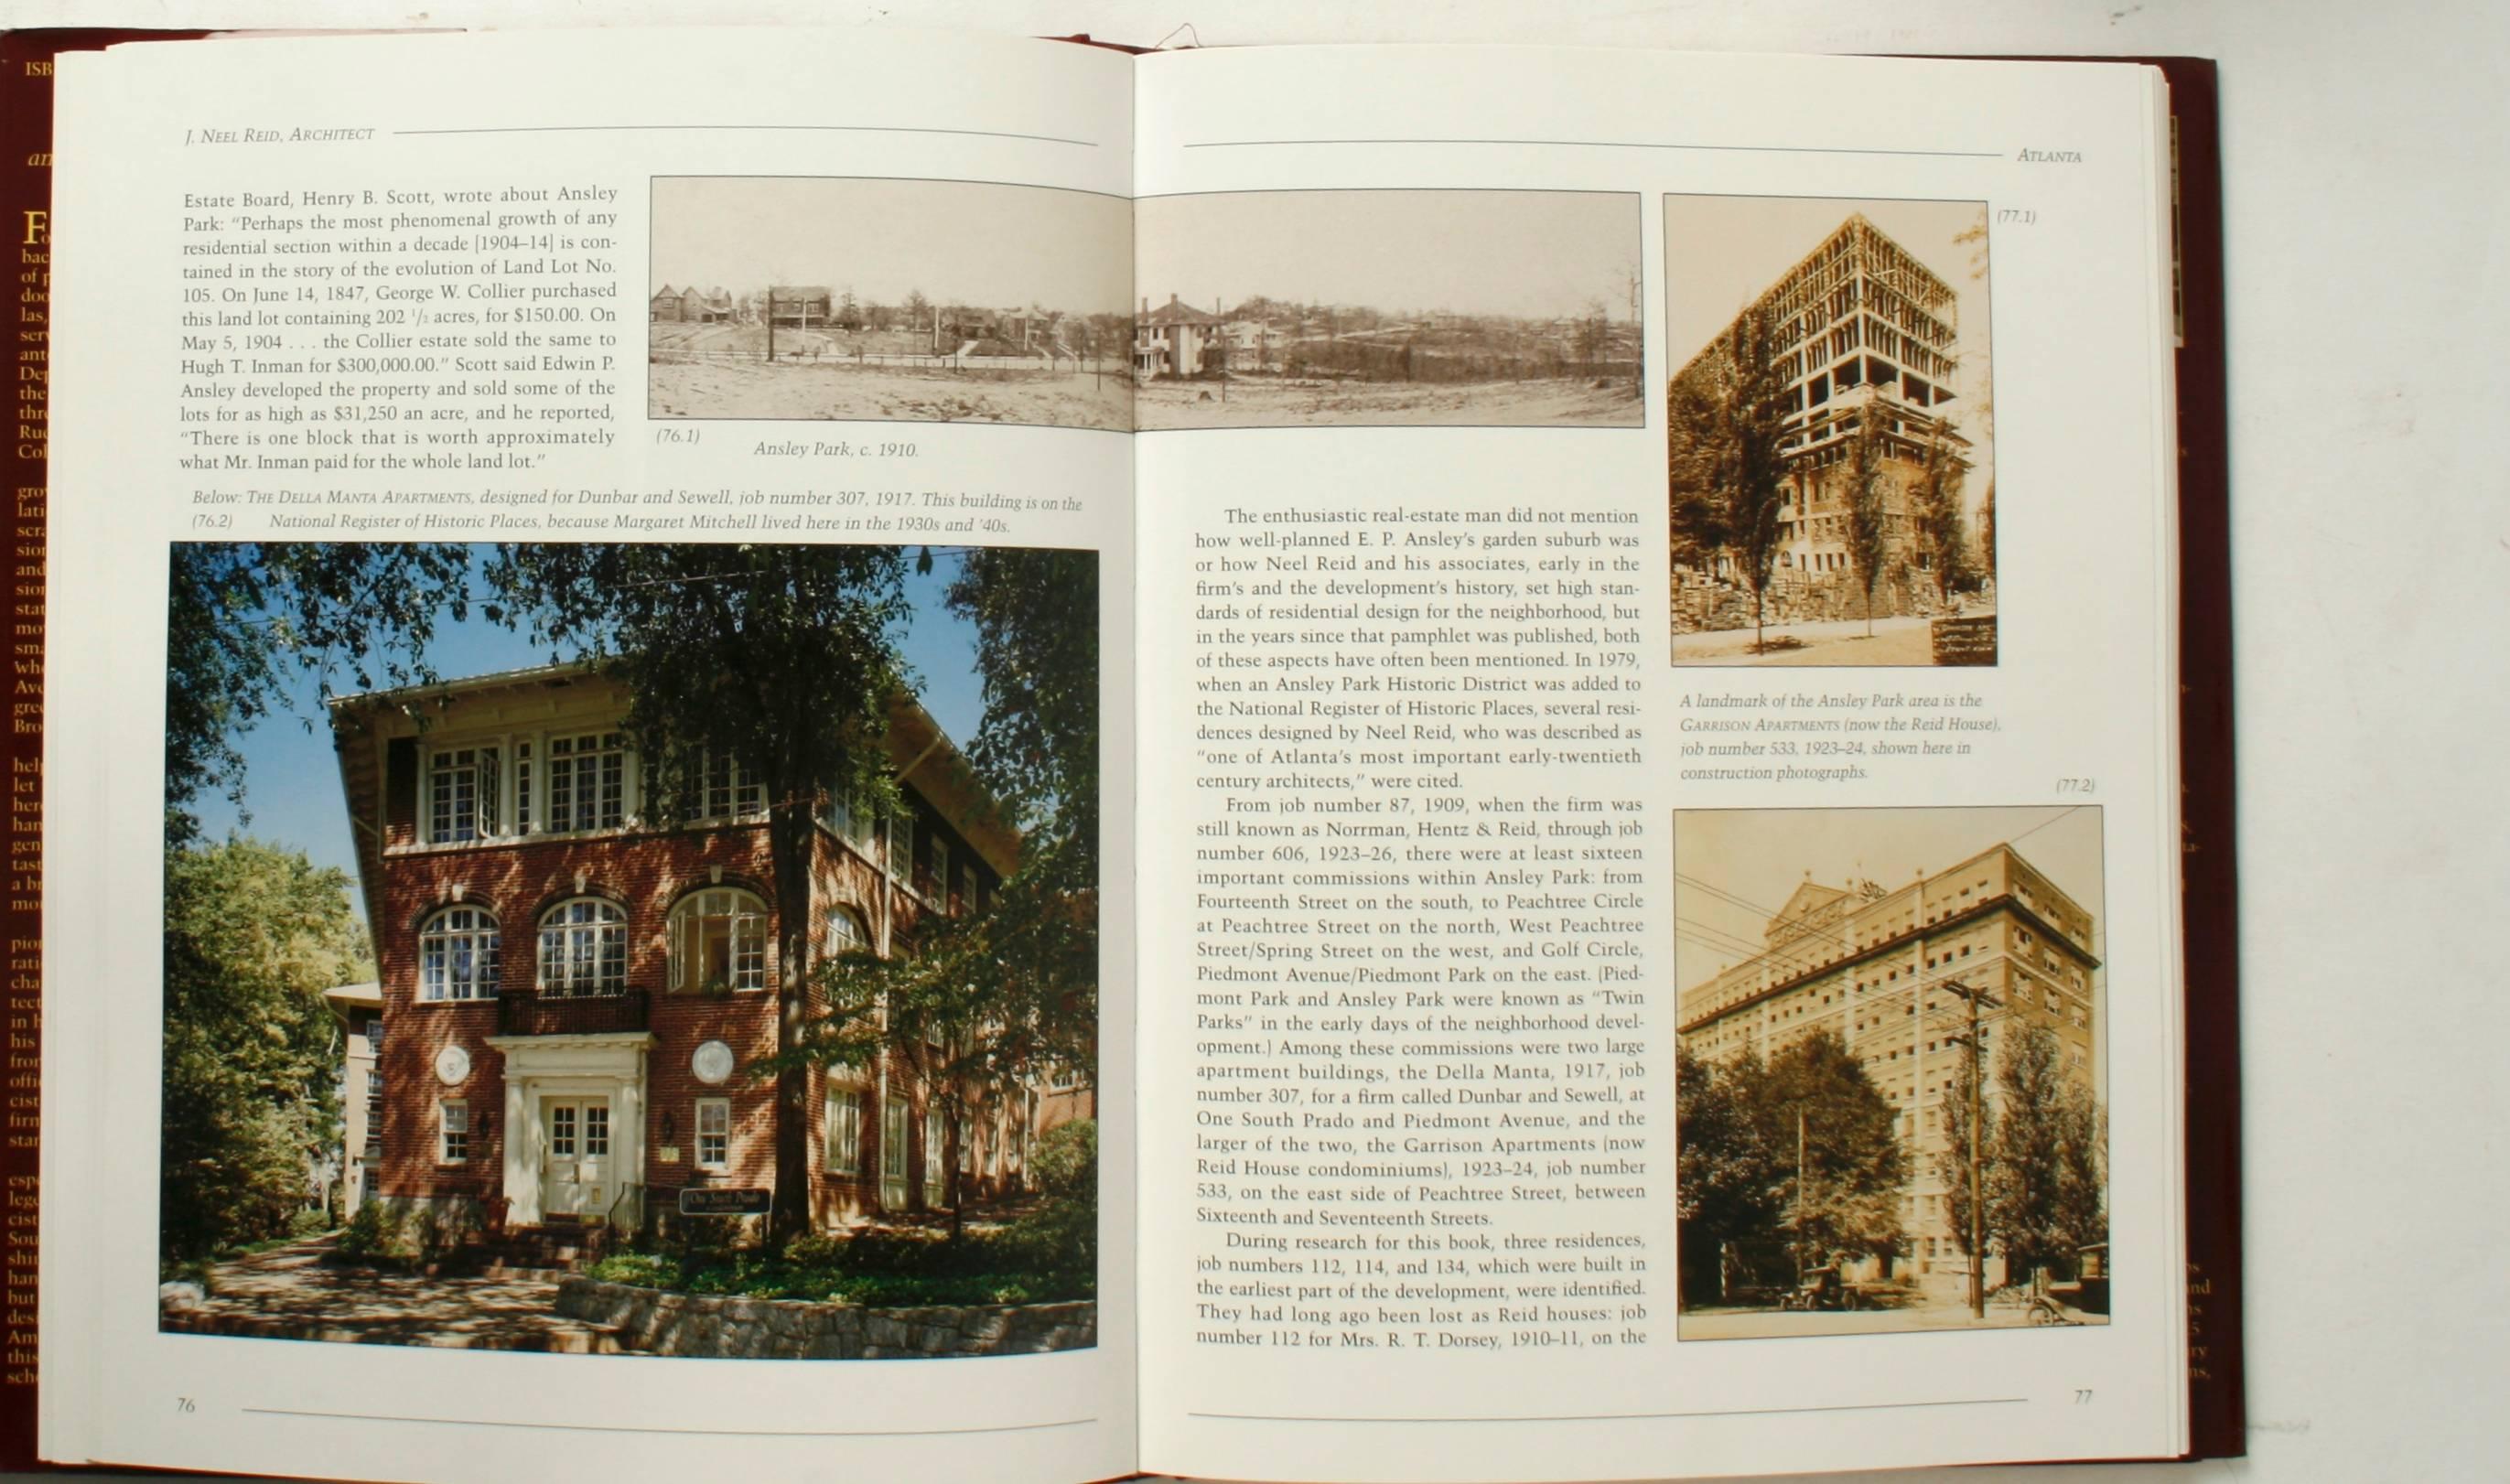 J. Neel Reid Architect by William R. Mitchell, Jr., First Edition 2